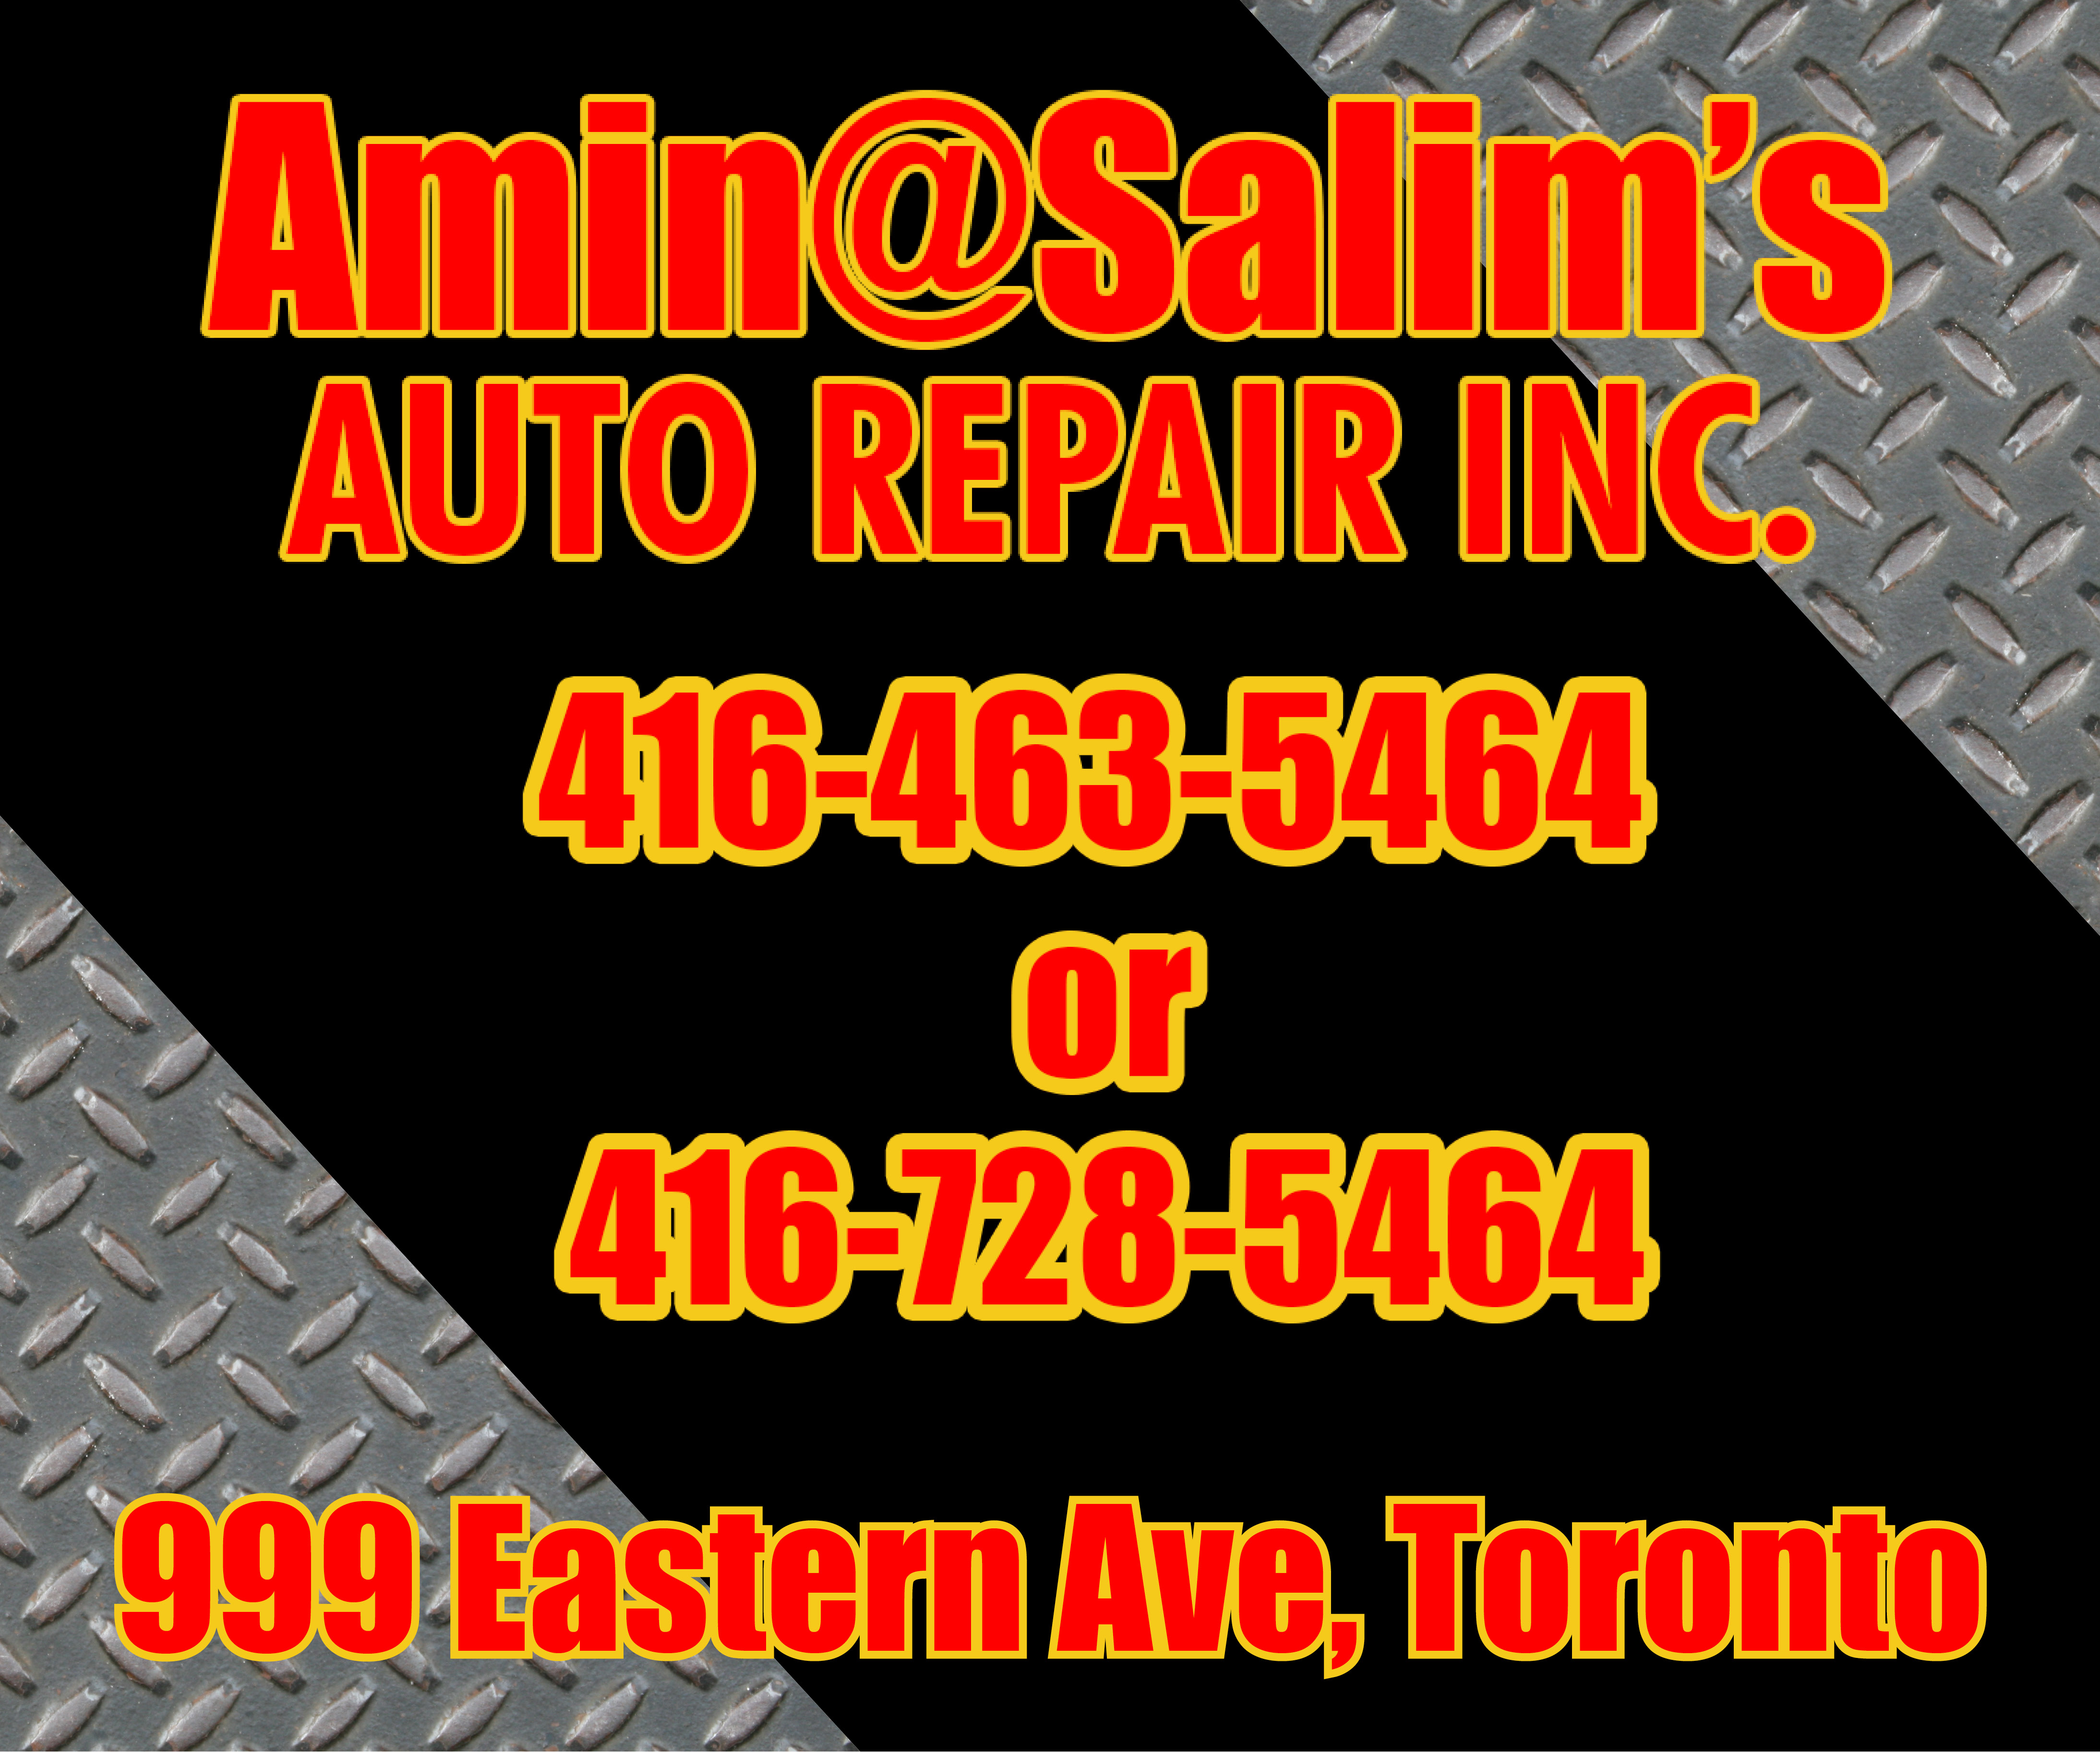 More from Amin @ Salim's Auto Repair Inc.